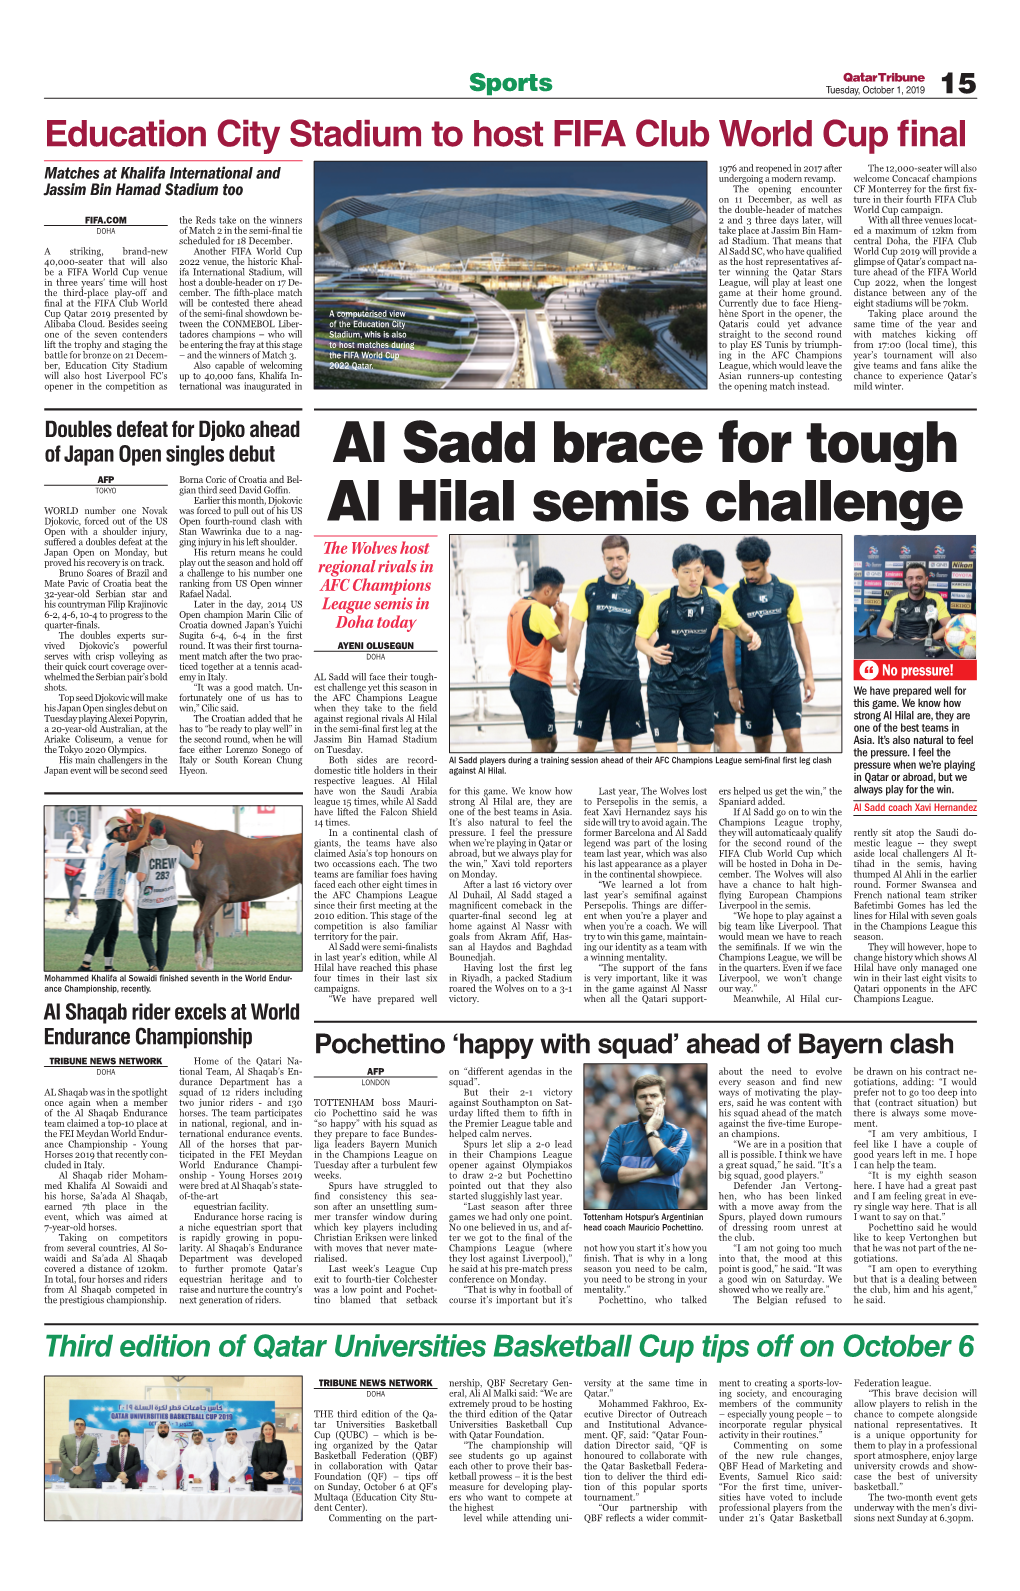 Al Sadd Brace for Tough Al Hilal Semis Challenge